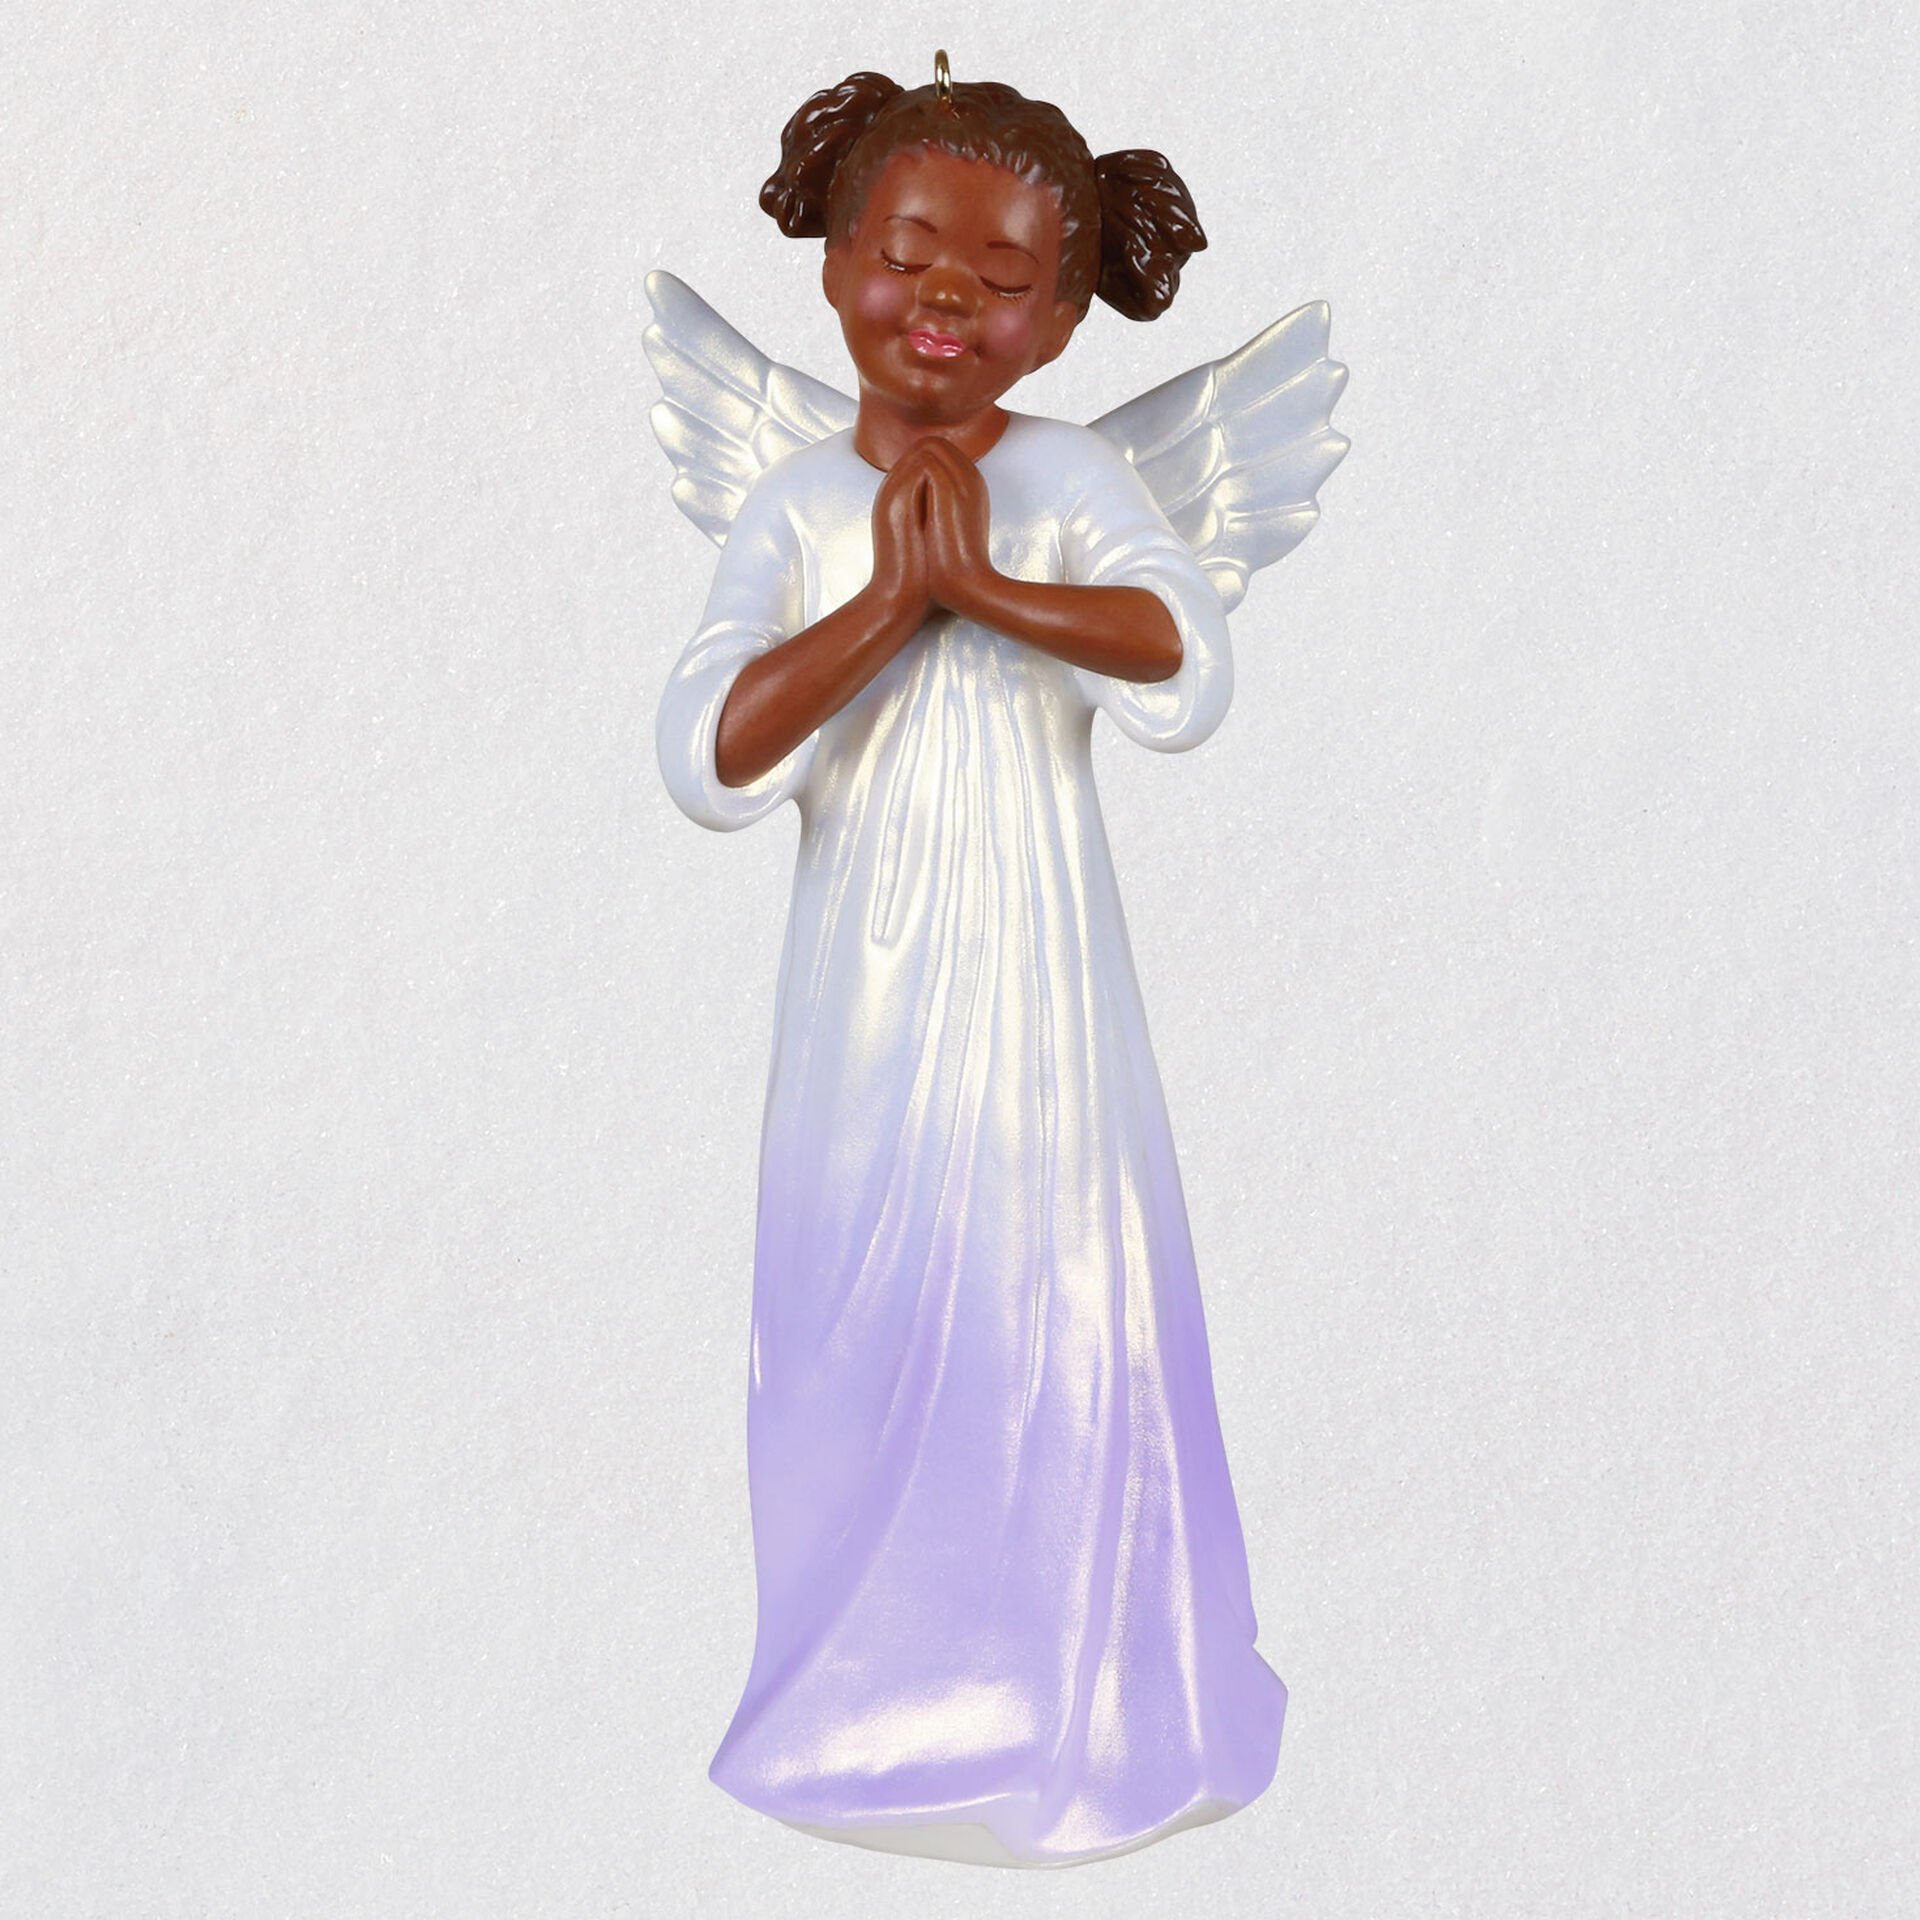 Angel-of-Innocence-AfricanAmerican-Angel-Keepsake-Ornament_1999QSM7855_01.jpeg